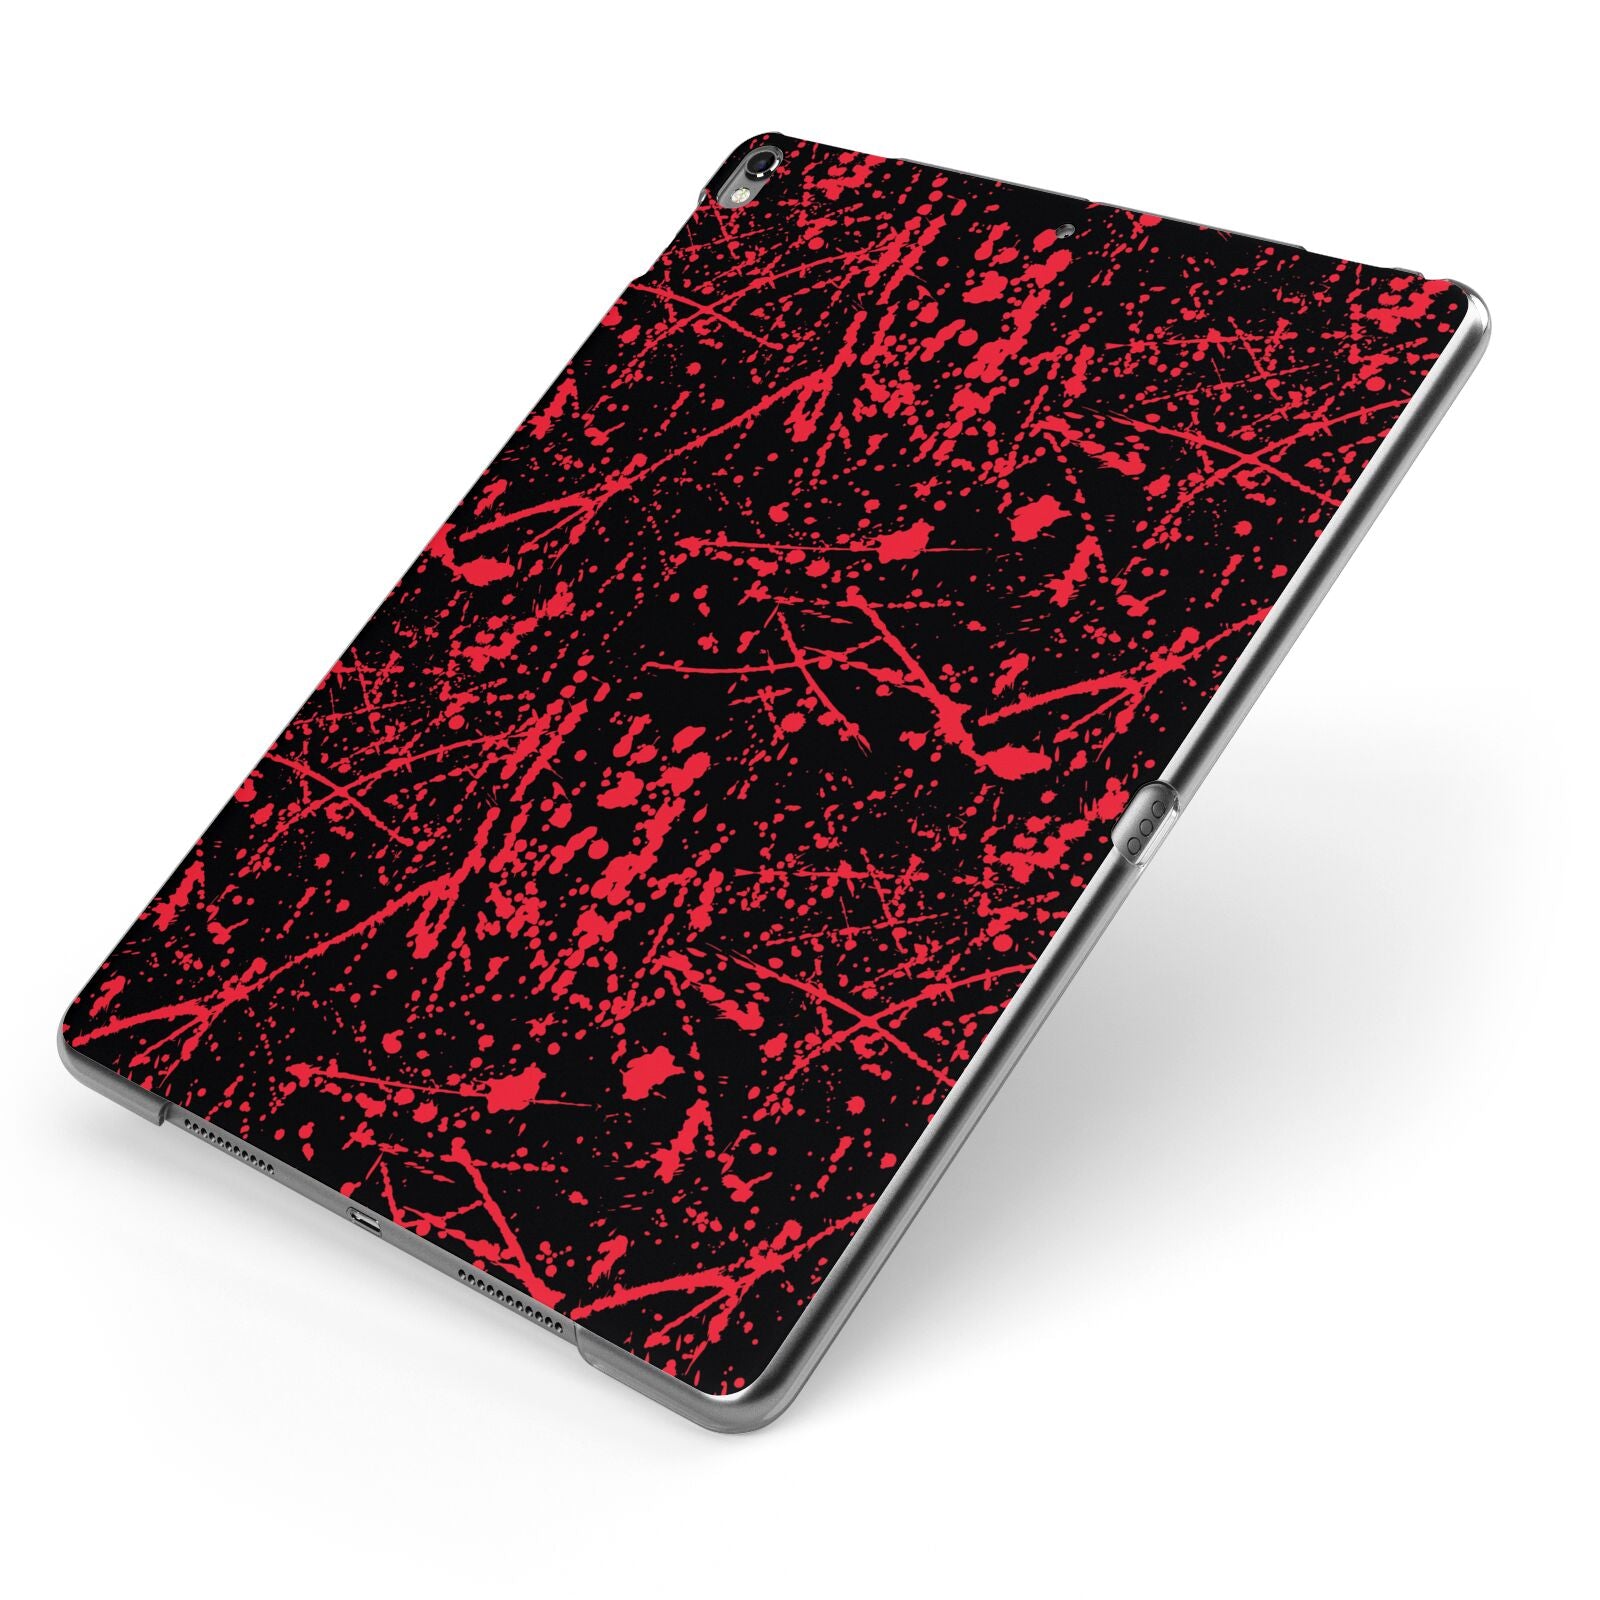 Blood Splatters Apple iPad Case on Grey iPad Side View